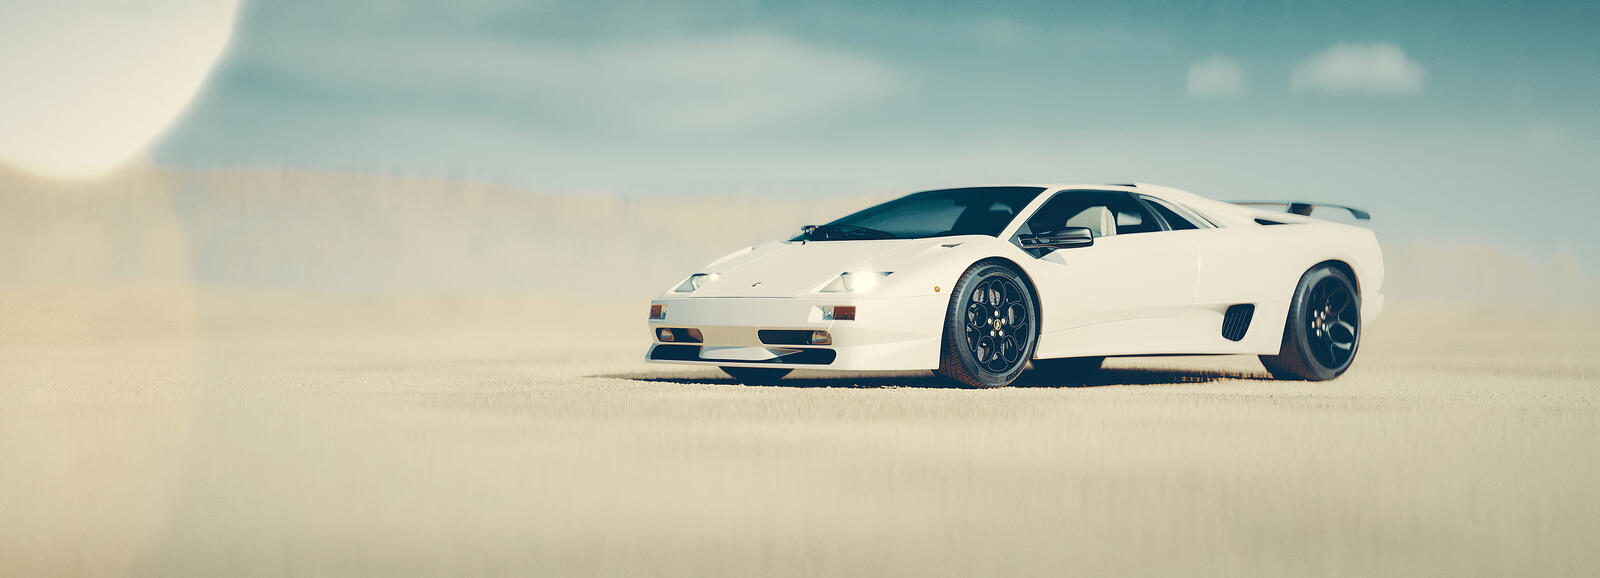 Free photo Lamborghini diablo white in the desert